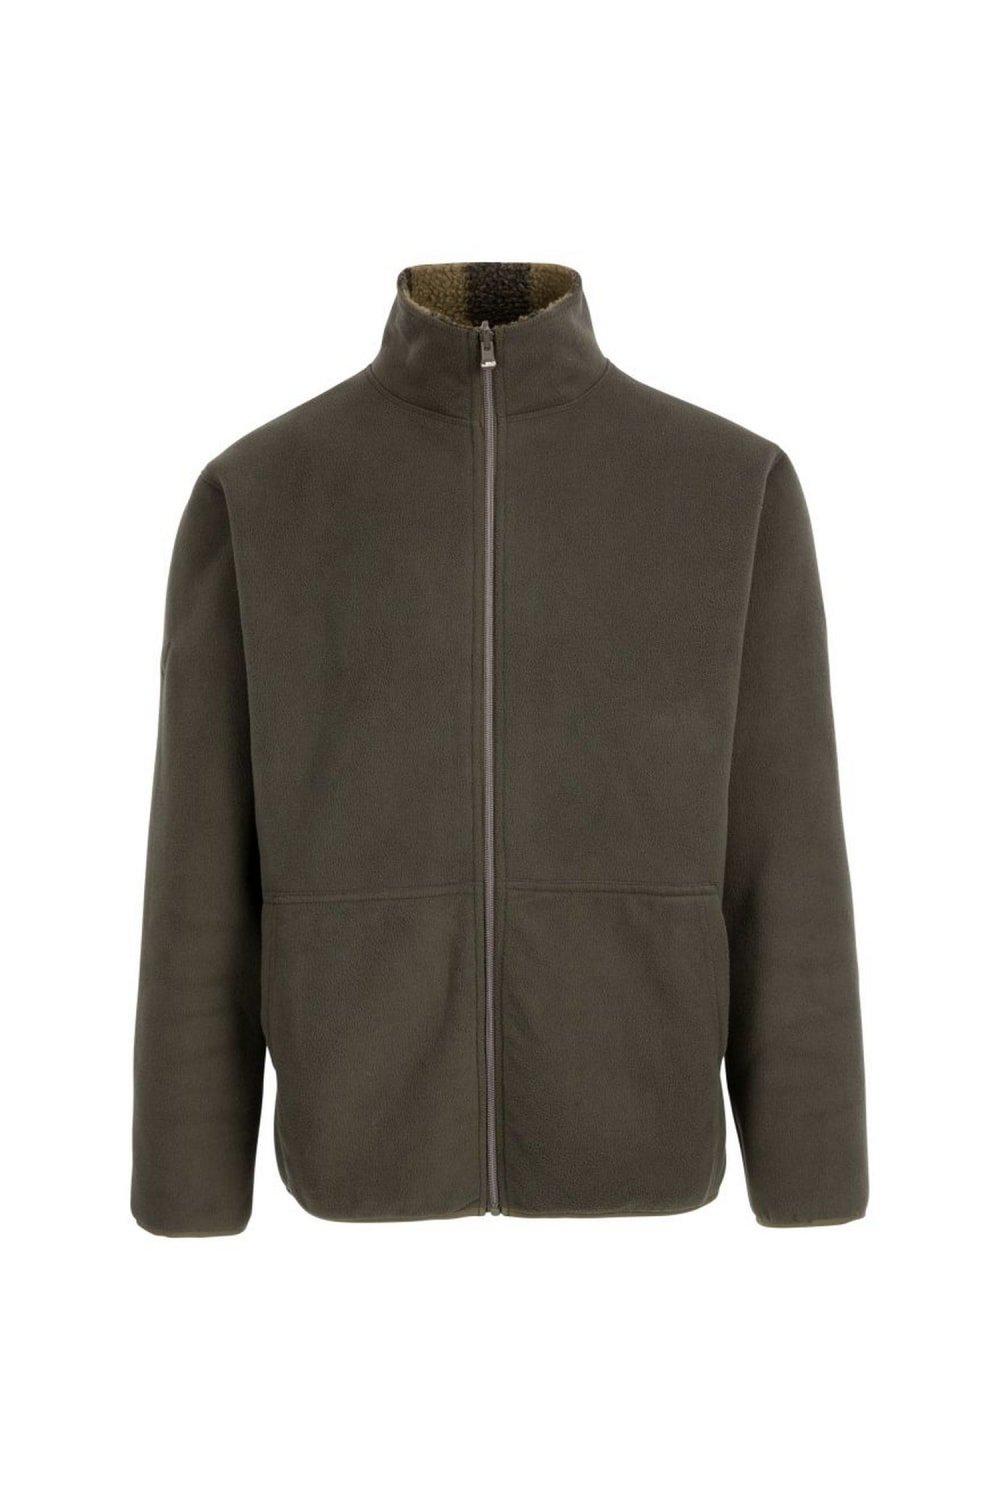 Флисовая куртка Tatsfield Trespass, коричневый